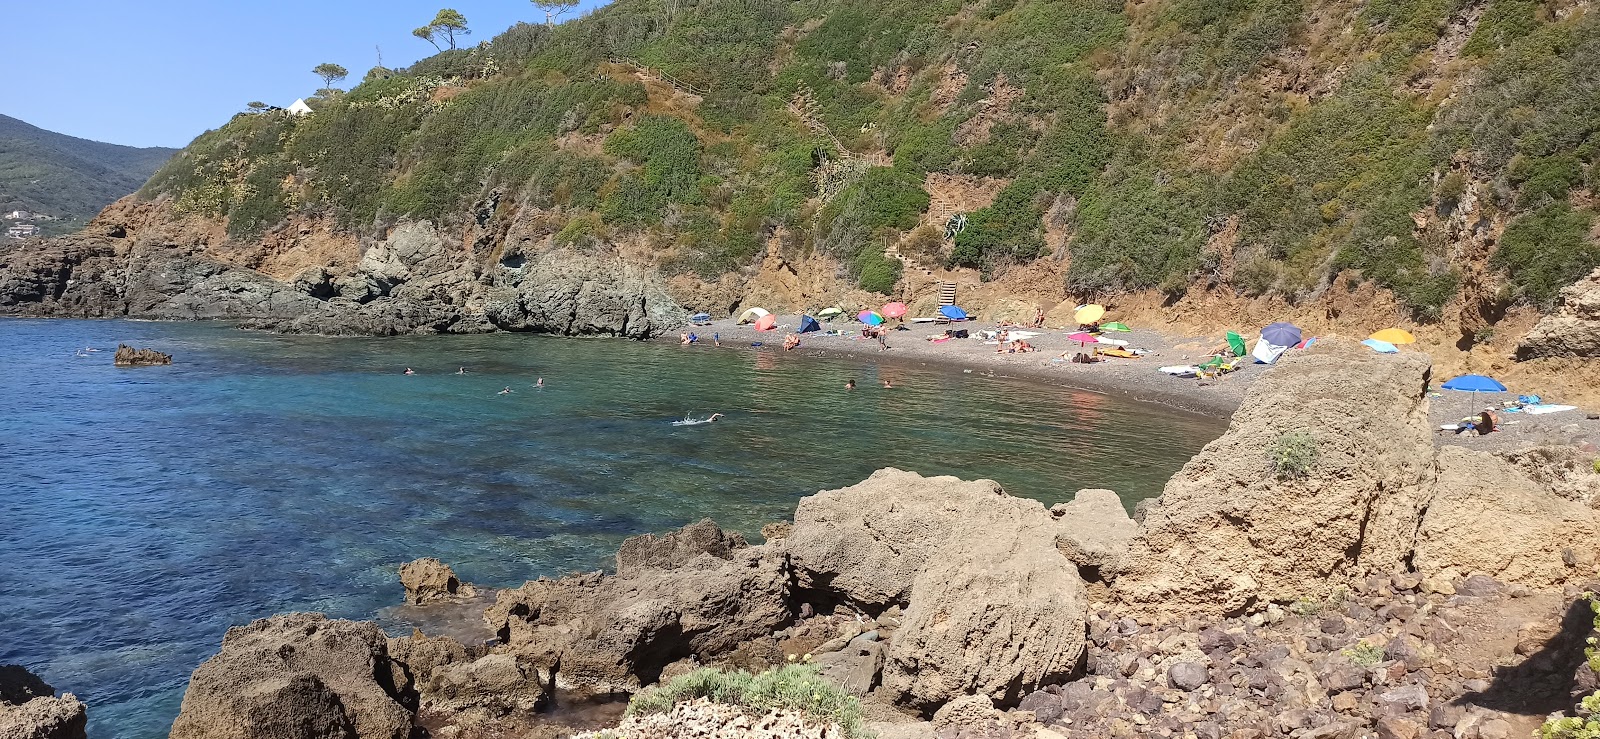 Foto de Spiaggia Canata zona salvaje